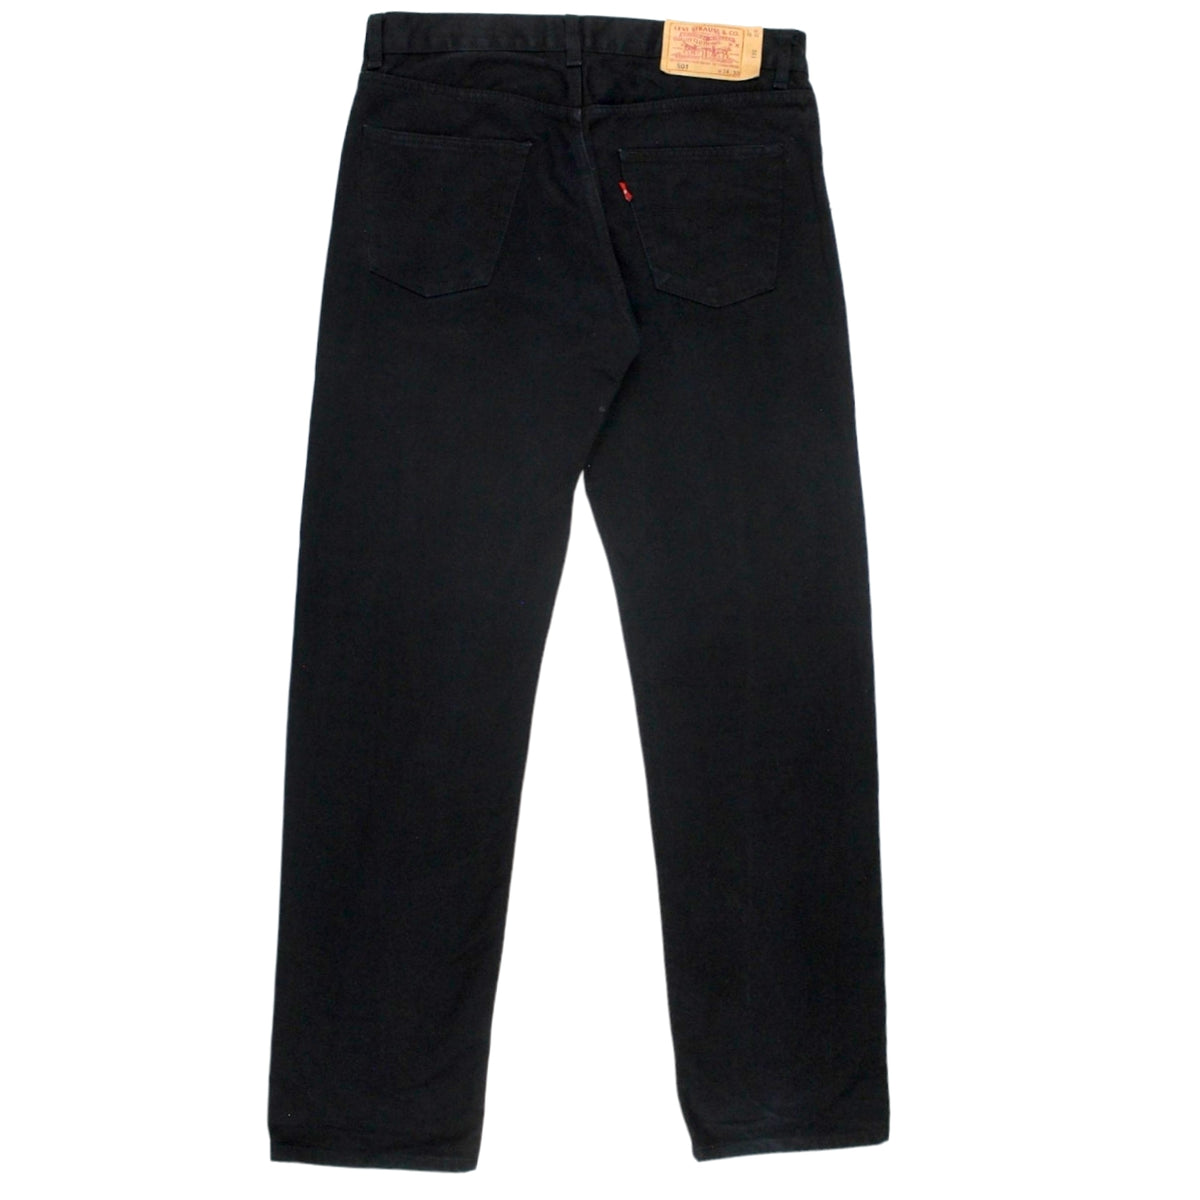 Levi 501's Black Denim Jeans